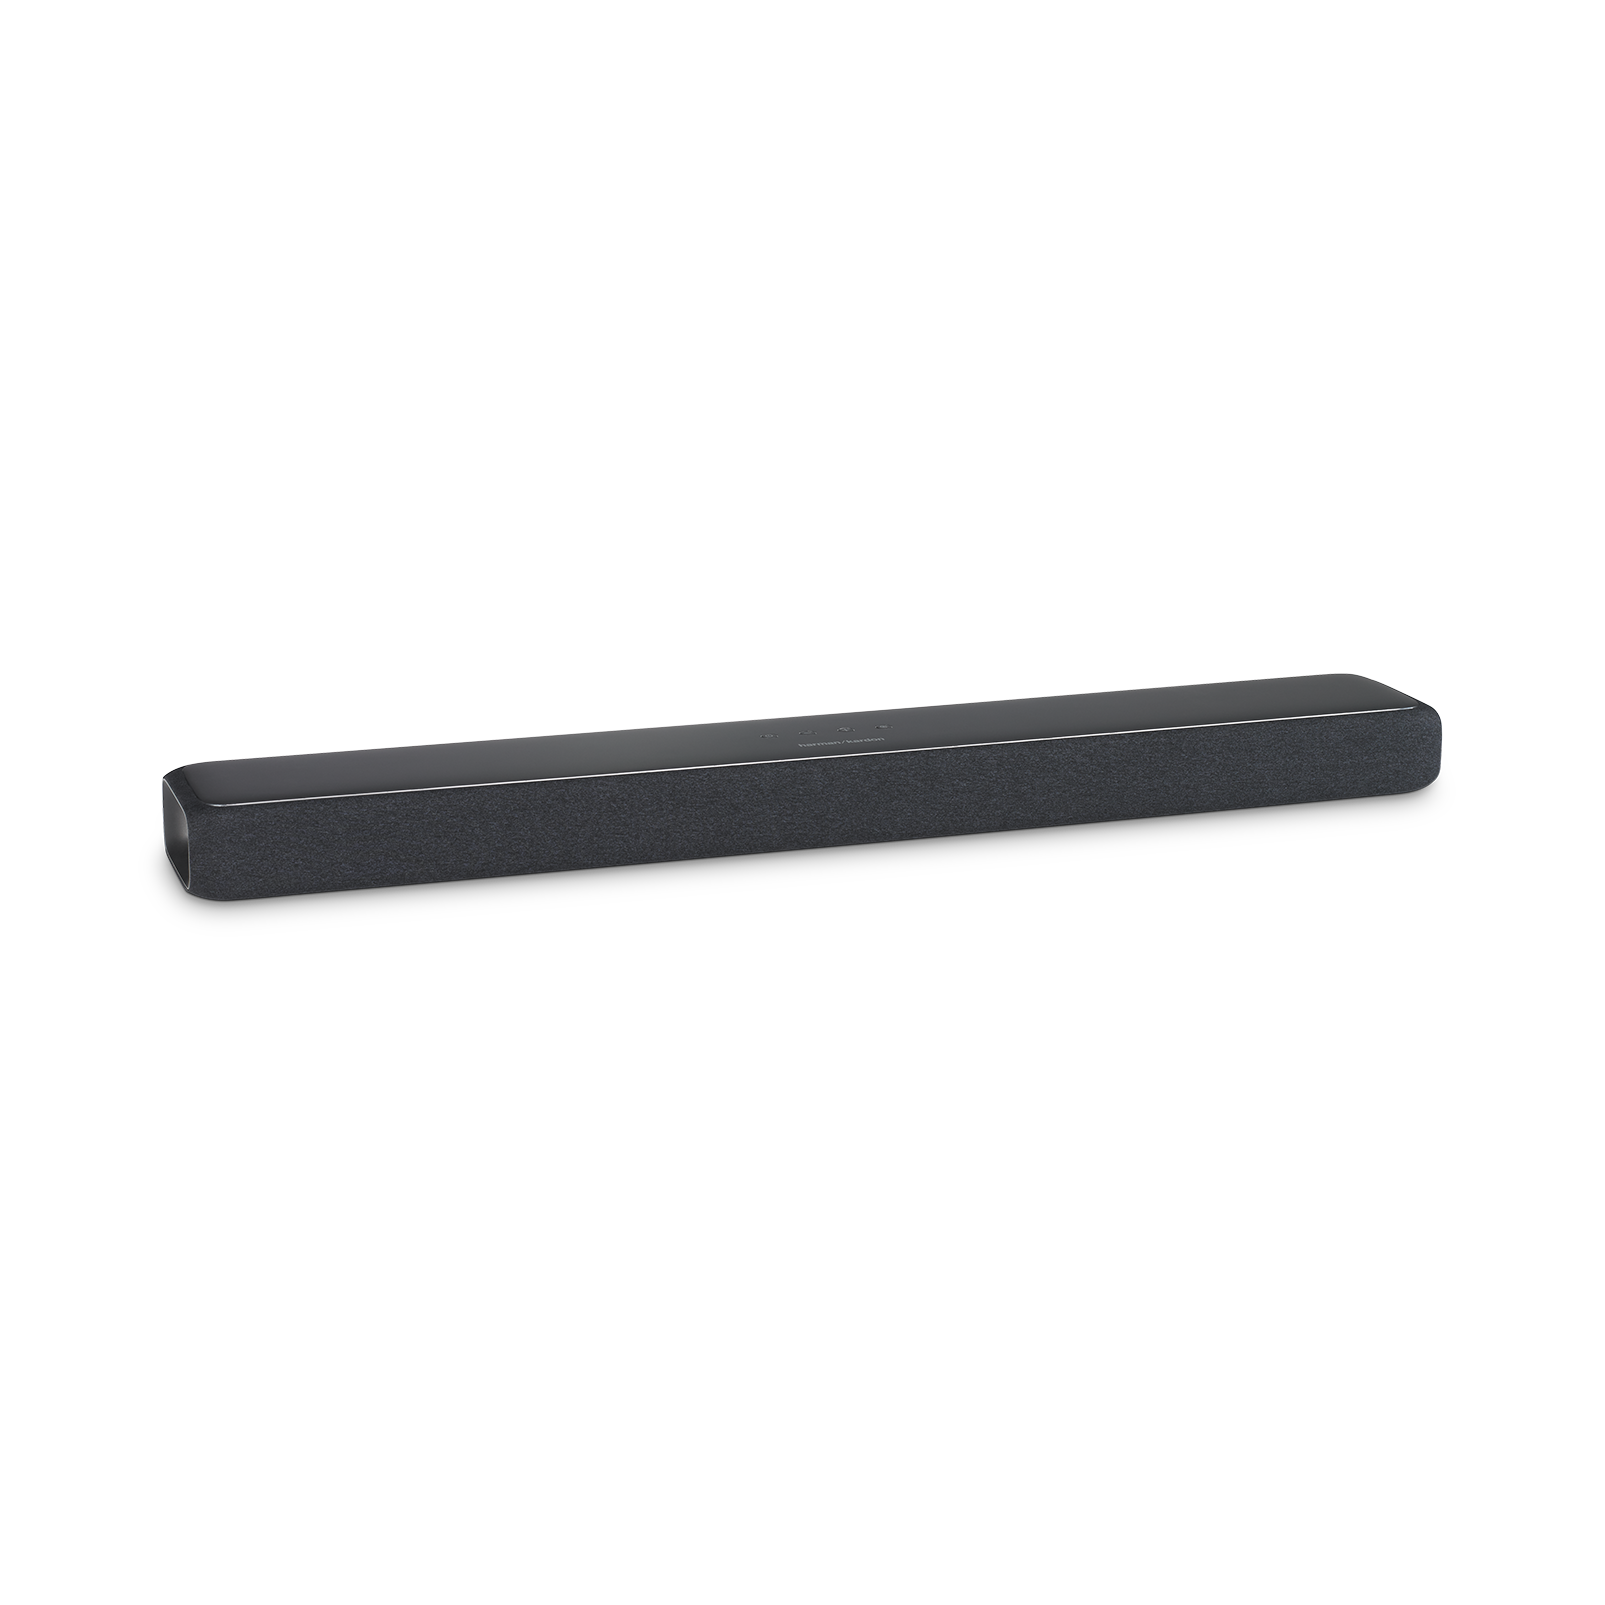 Harman Kardon Enchance 800  Sound Bar  Gray  Chromecast Wifi - HARMAN